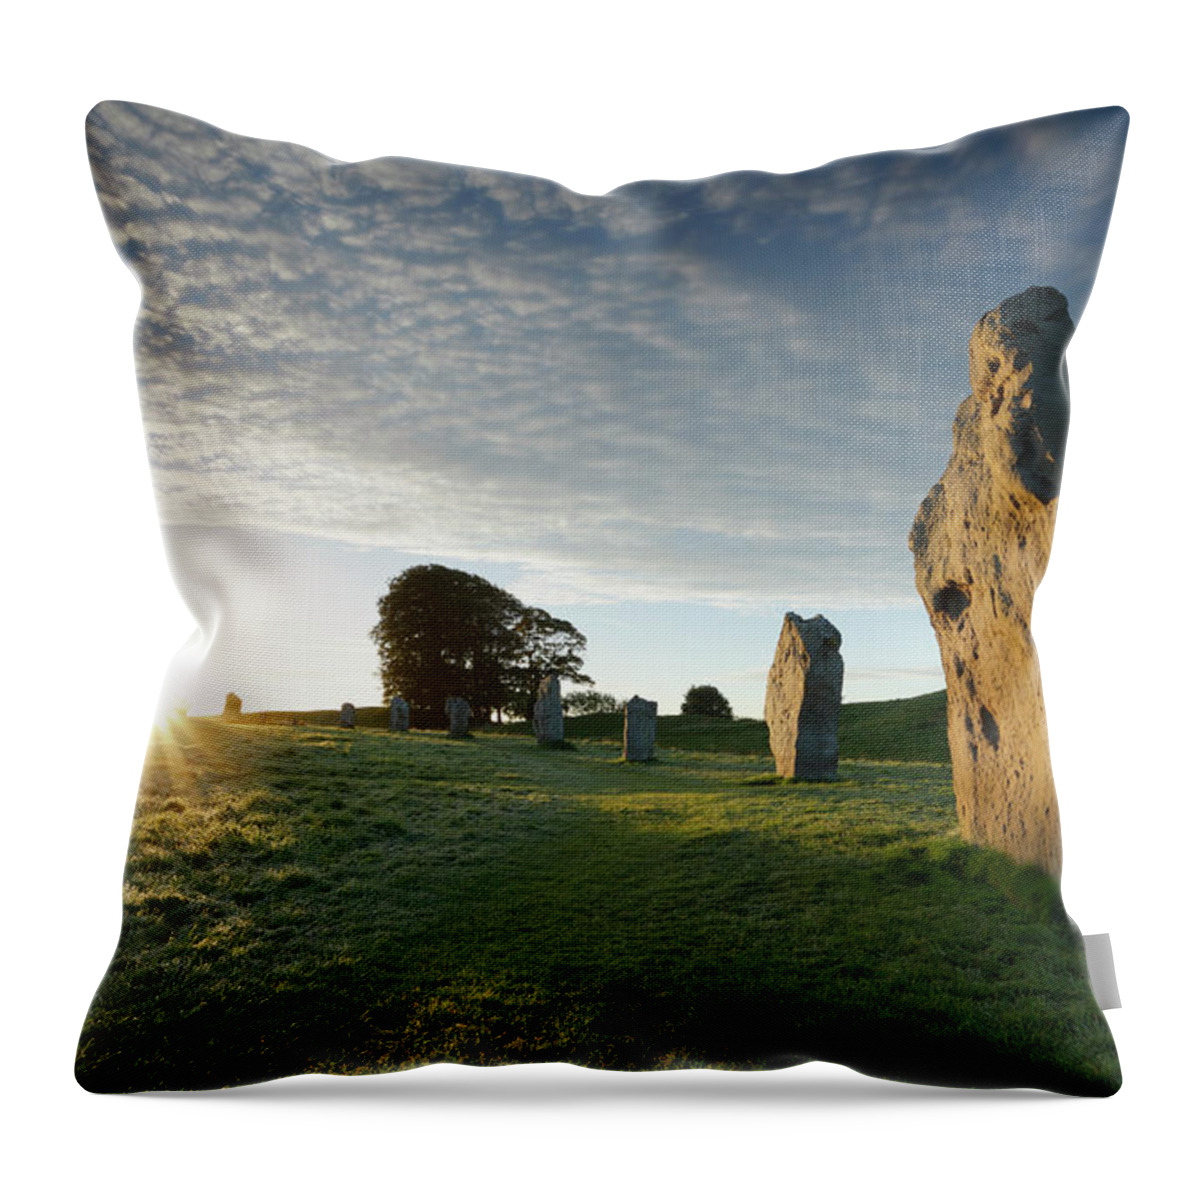 Prehistoric Era Throw Pillow featuring the photograph Avebury Stone Circle At Sunrise by James Osmond